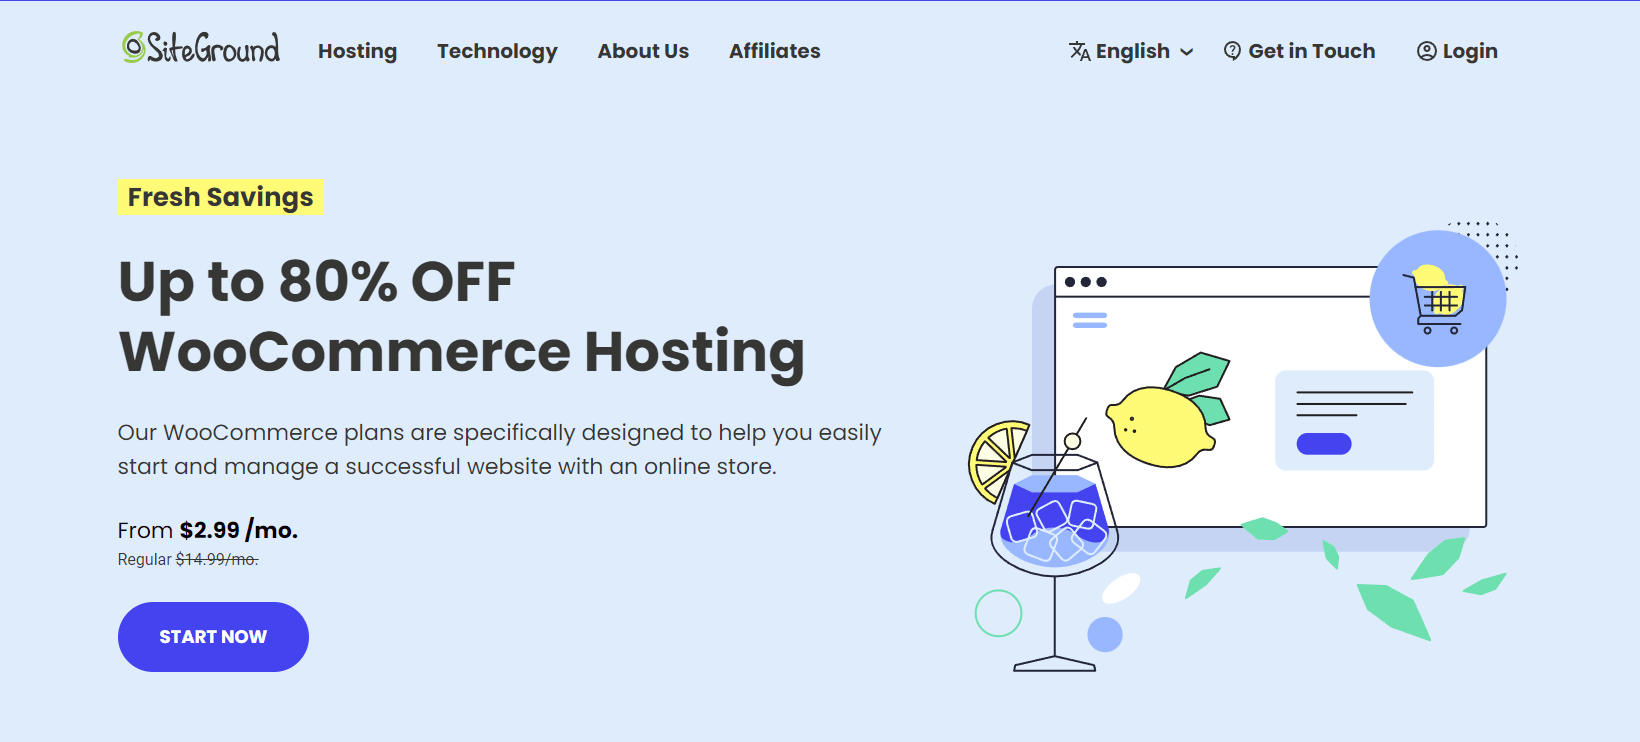 SiteGround WooCommerce hosting page.